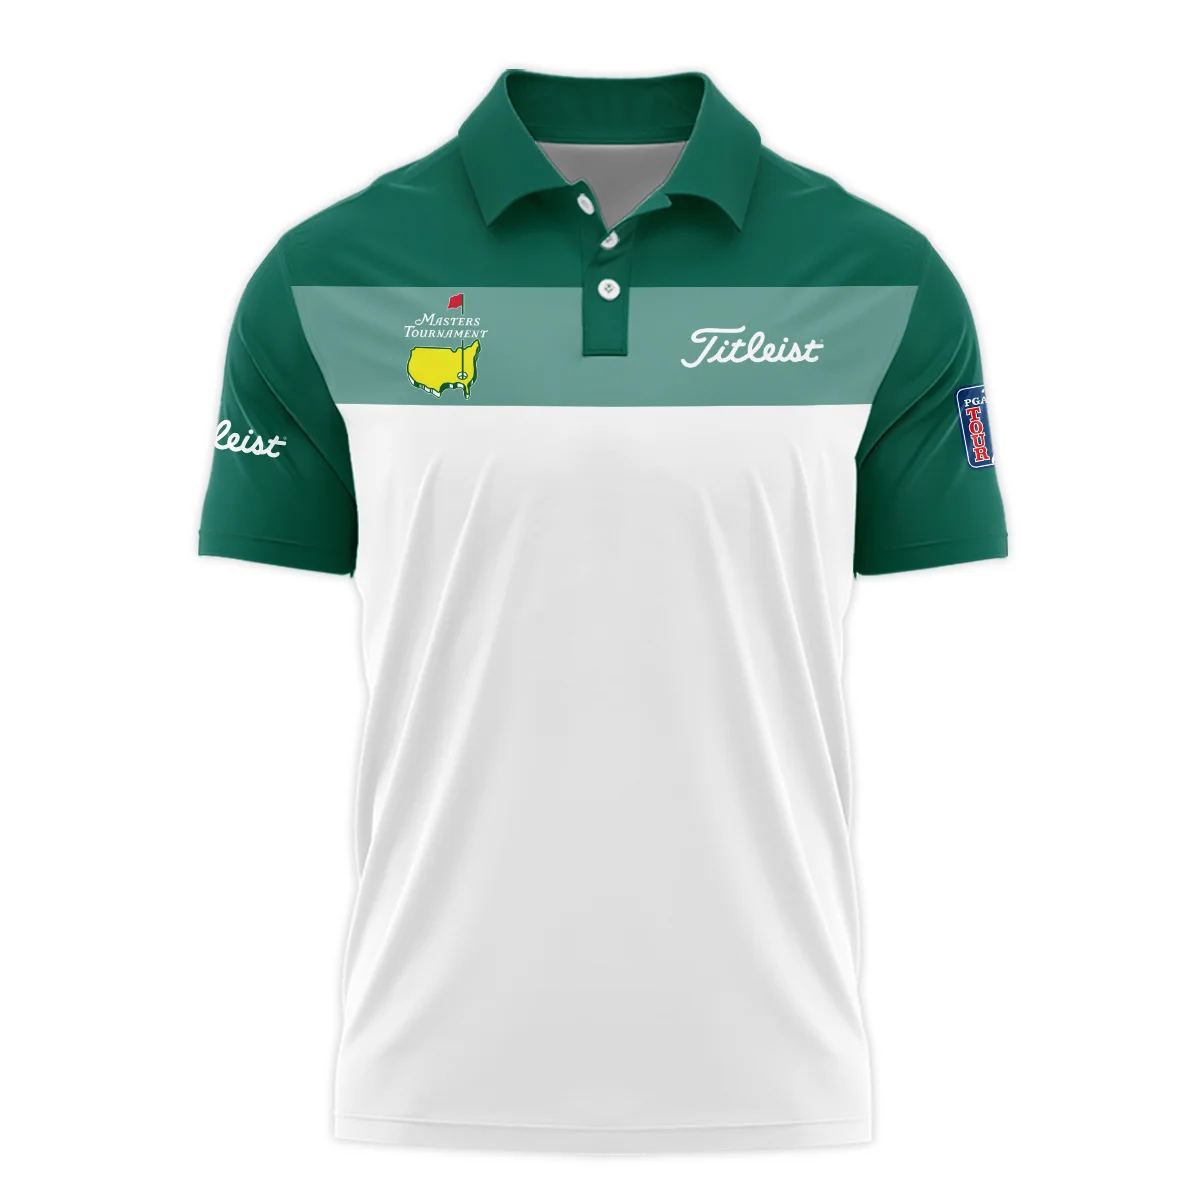 Golf Masters Tournament Titleist Quarter-Zip Jacket Sports Green And White All Over Print Quarter-Zip Jacket